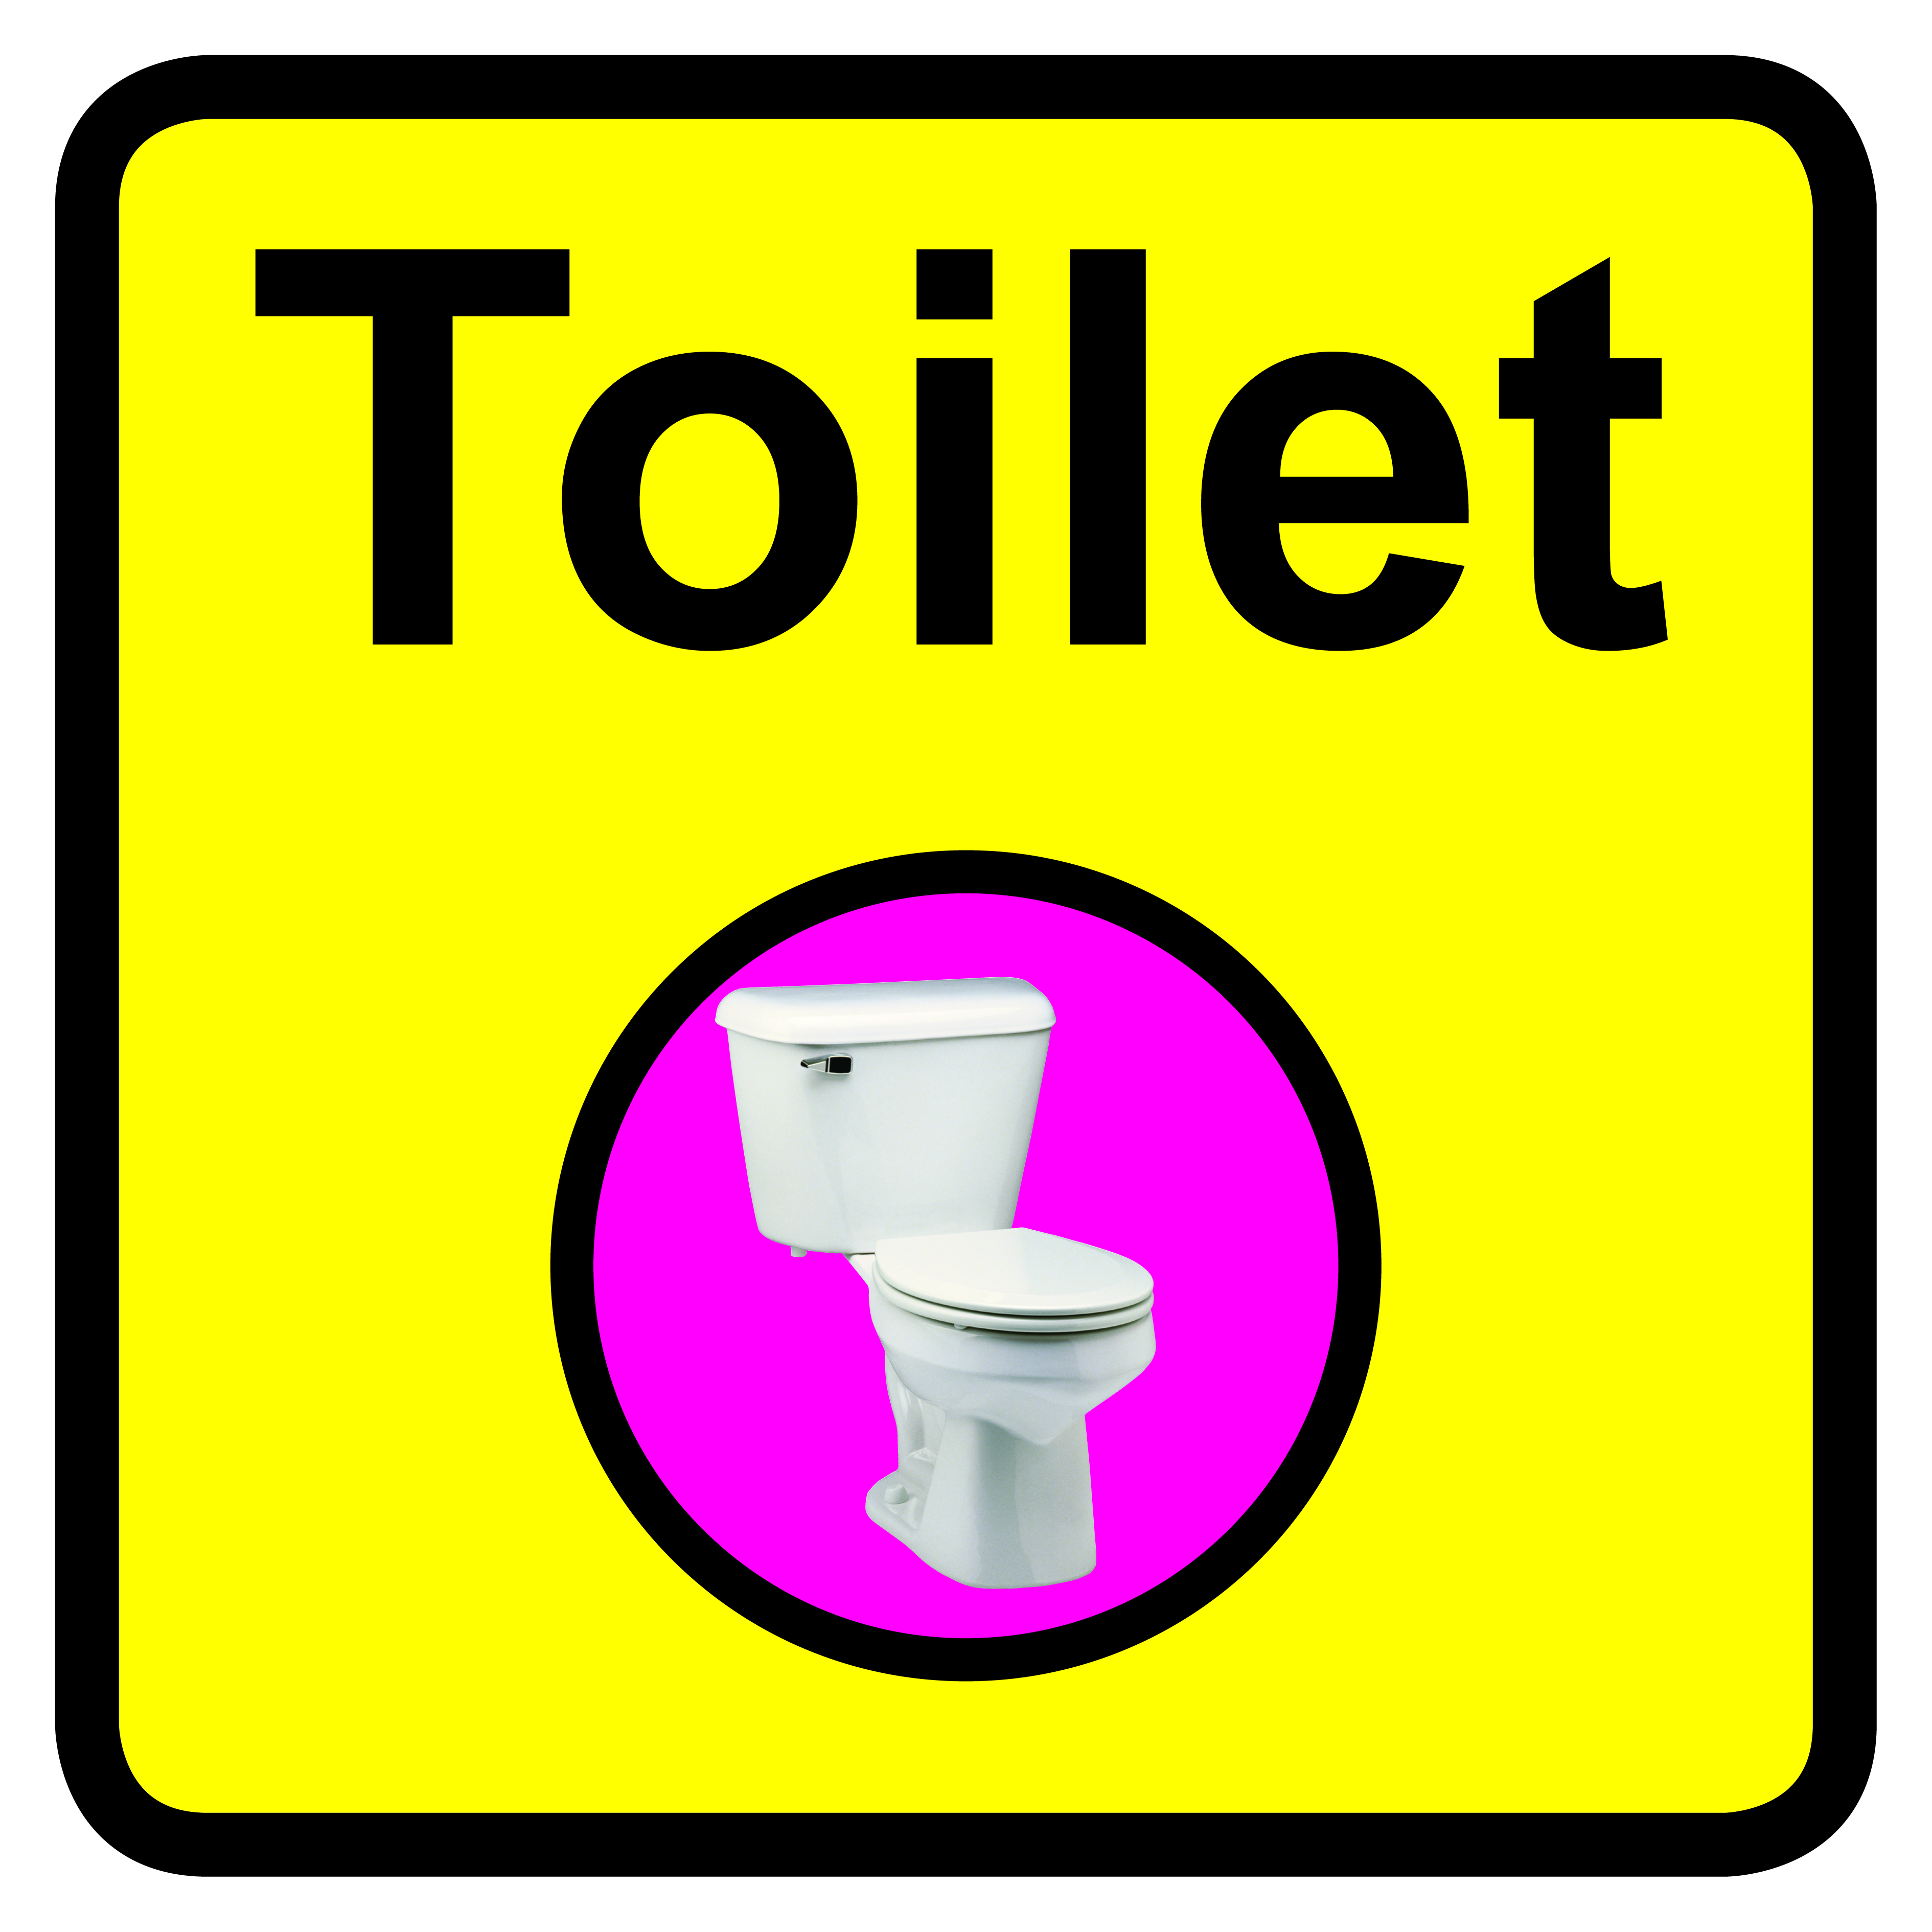 Skibi toilet codes. Дорожный знак туалет. Фото толет. Картинки g Toilet.